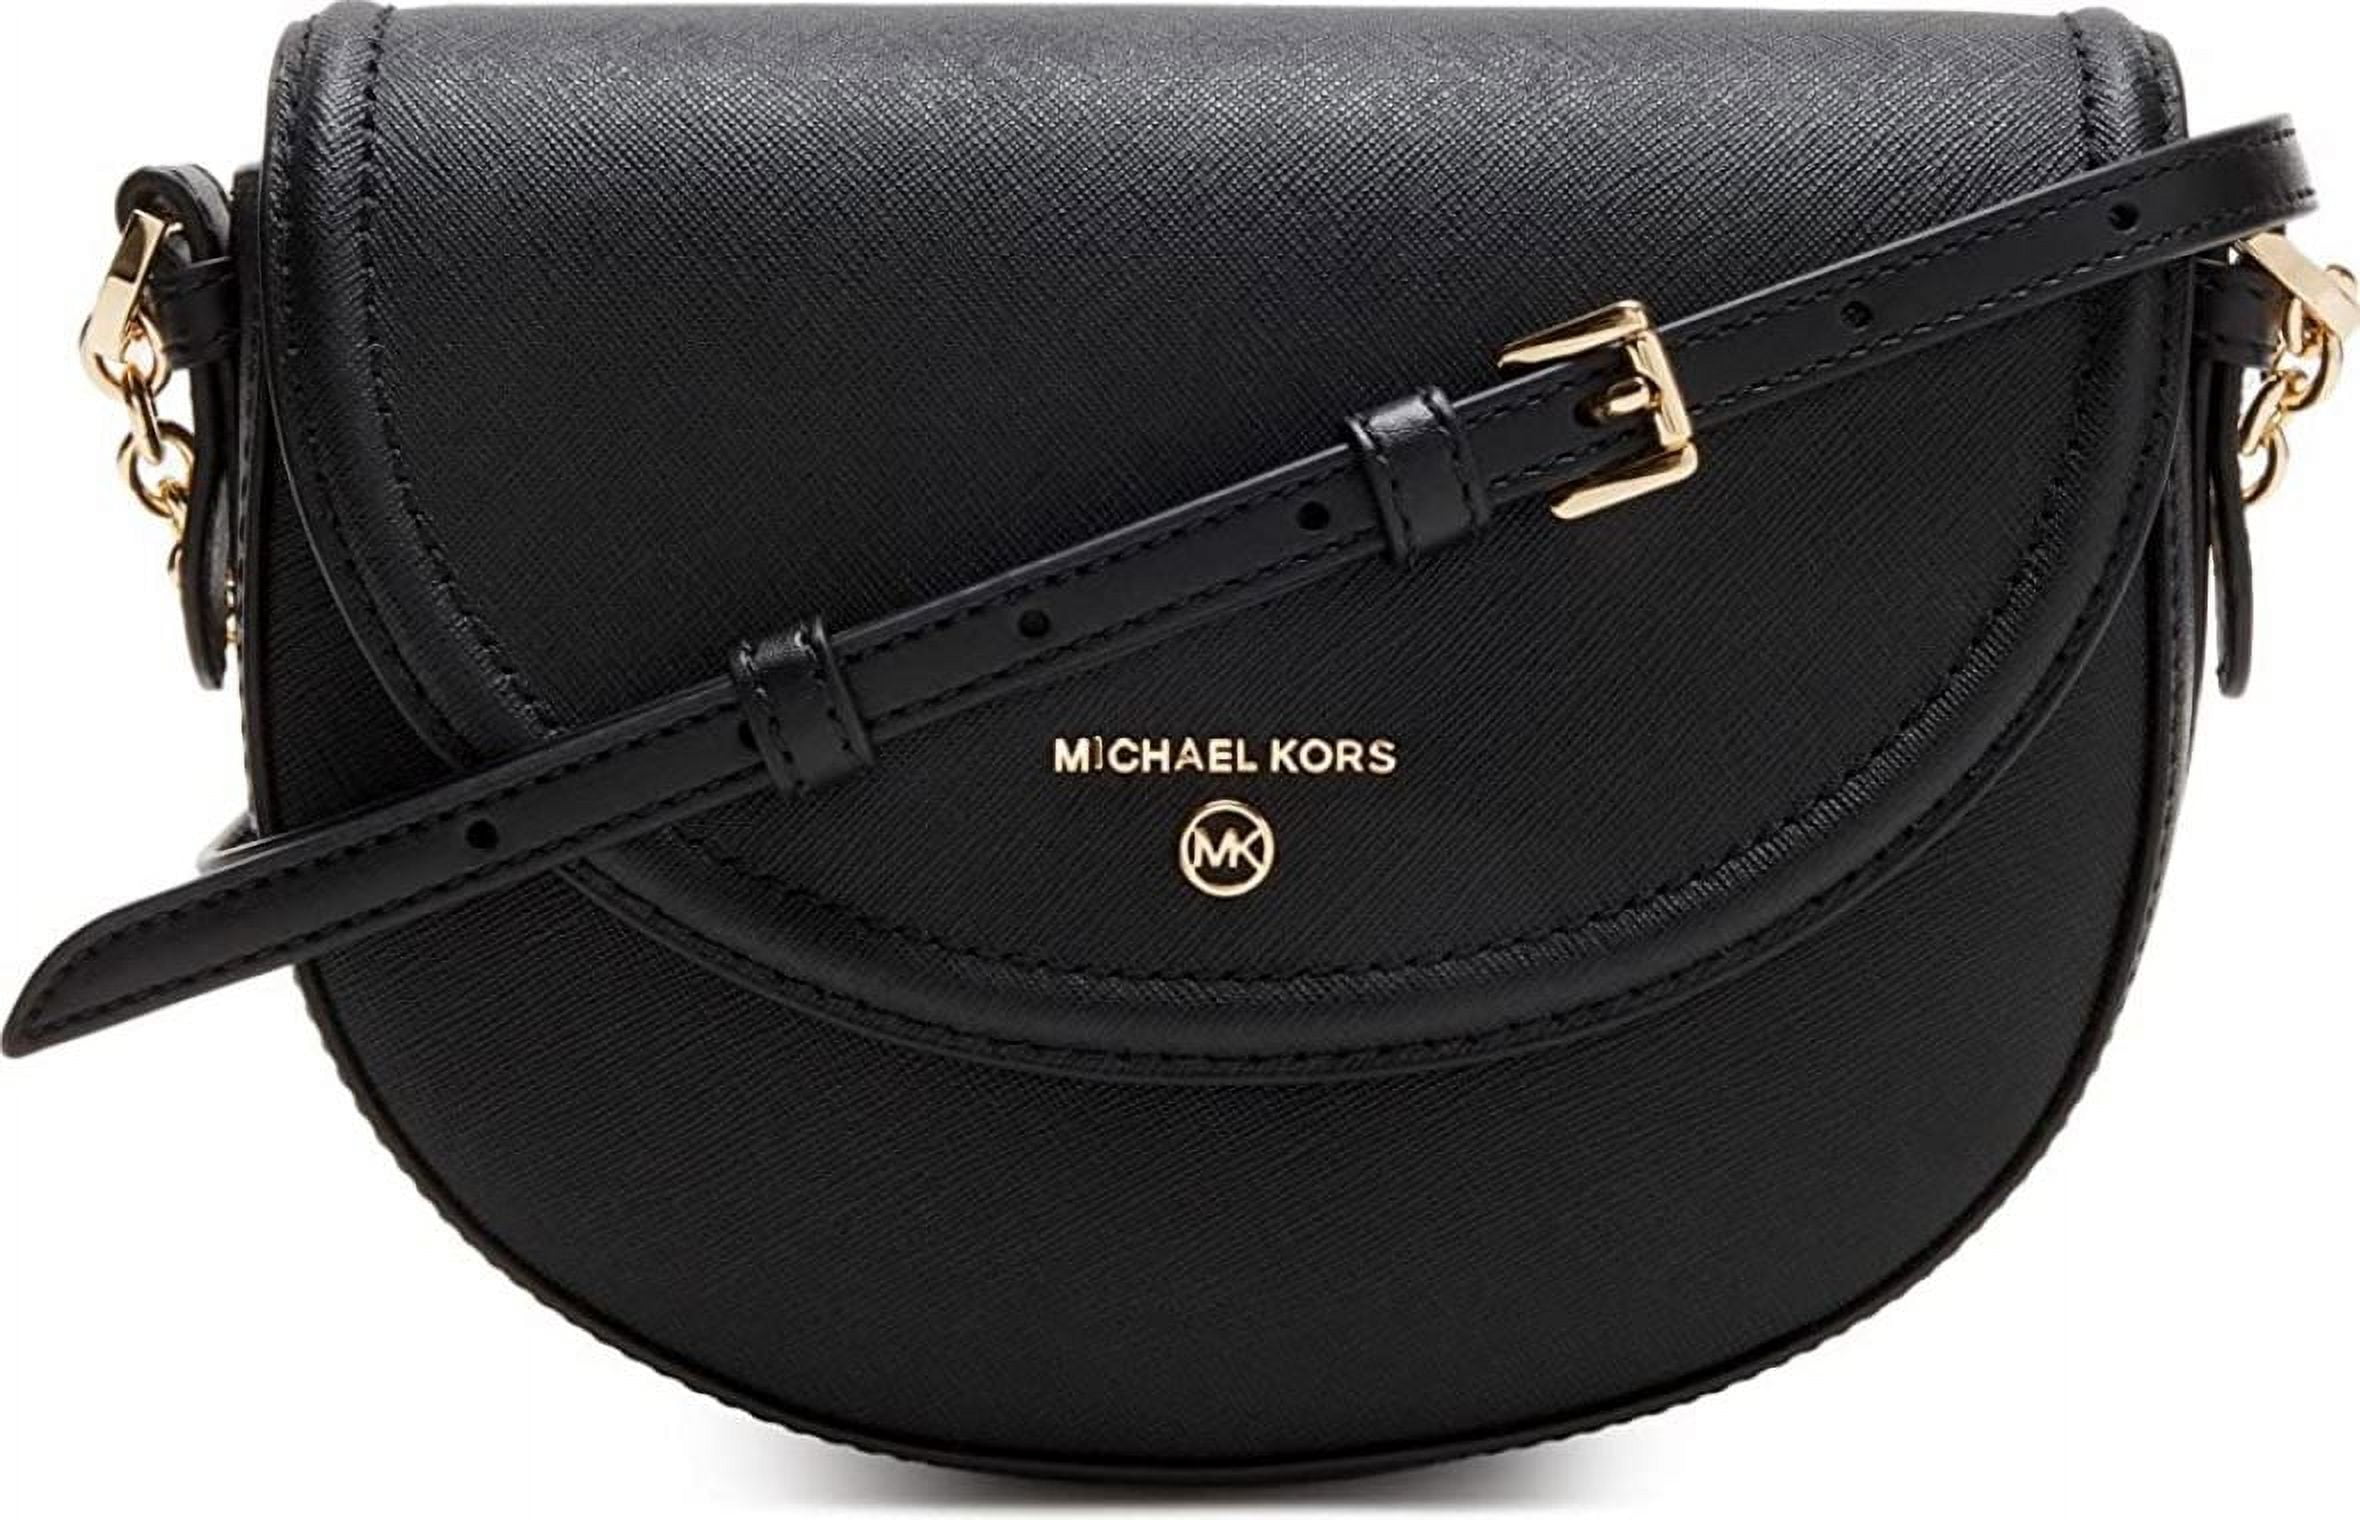 Michael Kors Women's Large Saffiano Leather Dome Crossbody Bag - Black 